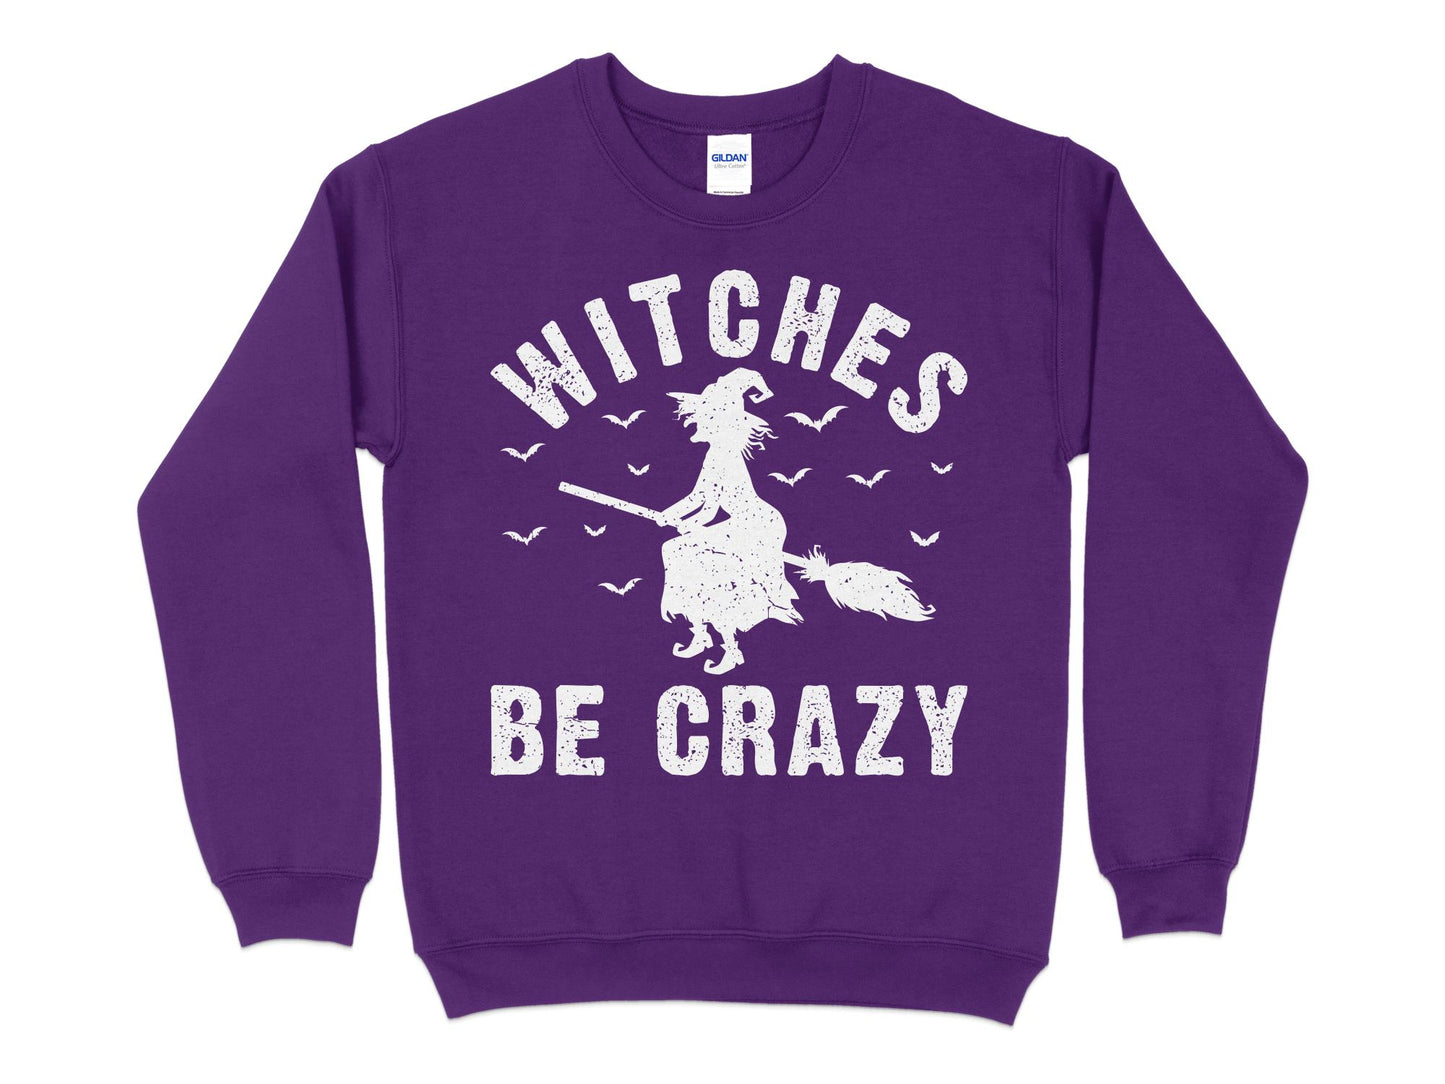 Witches Be Crazy Sweatshirt, purple